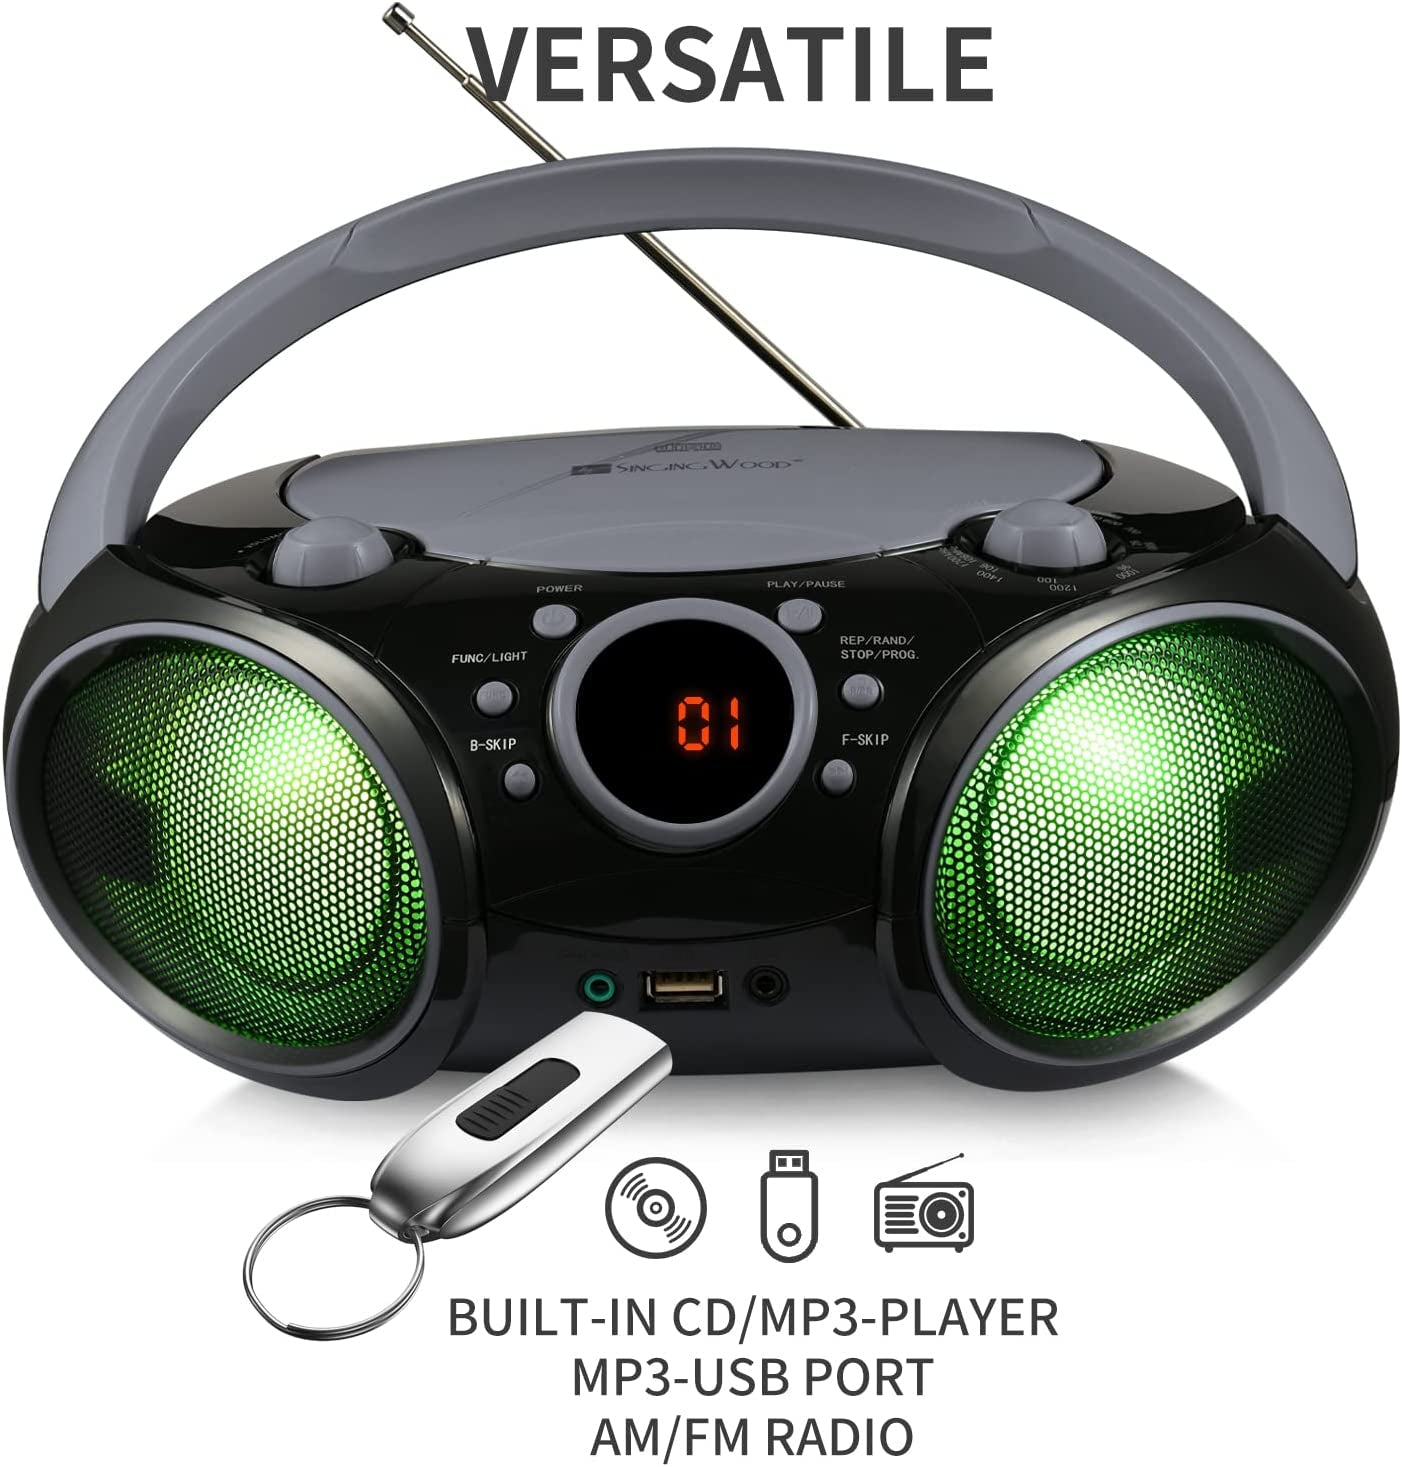 Portable CD Boombox with Bluetooth, USB, MP3 Player, AM/FM Radio, AUX Input, Headset Jack, and LED Backlit Display (Phantom Black)